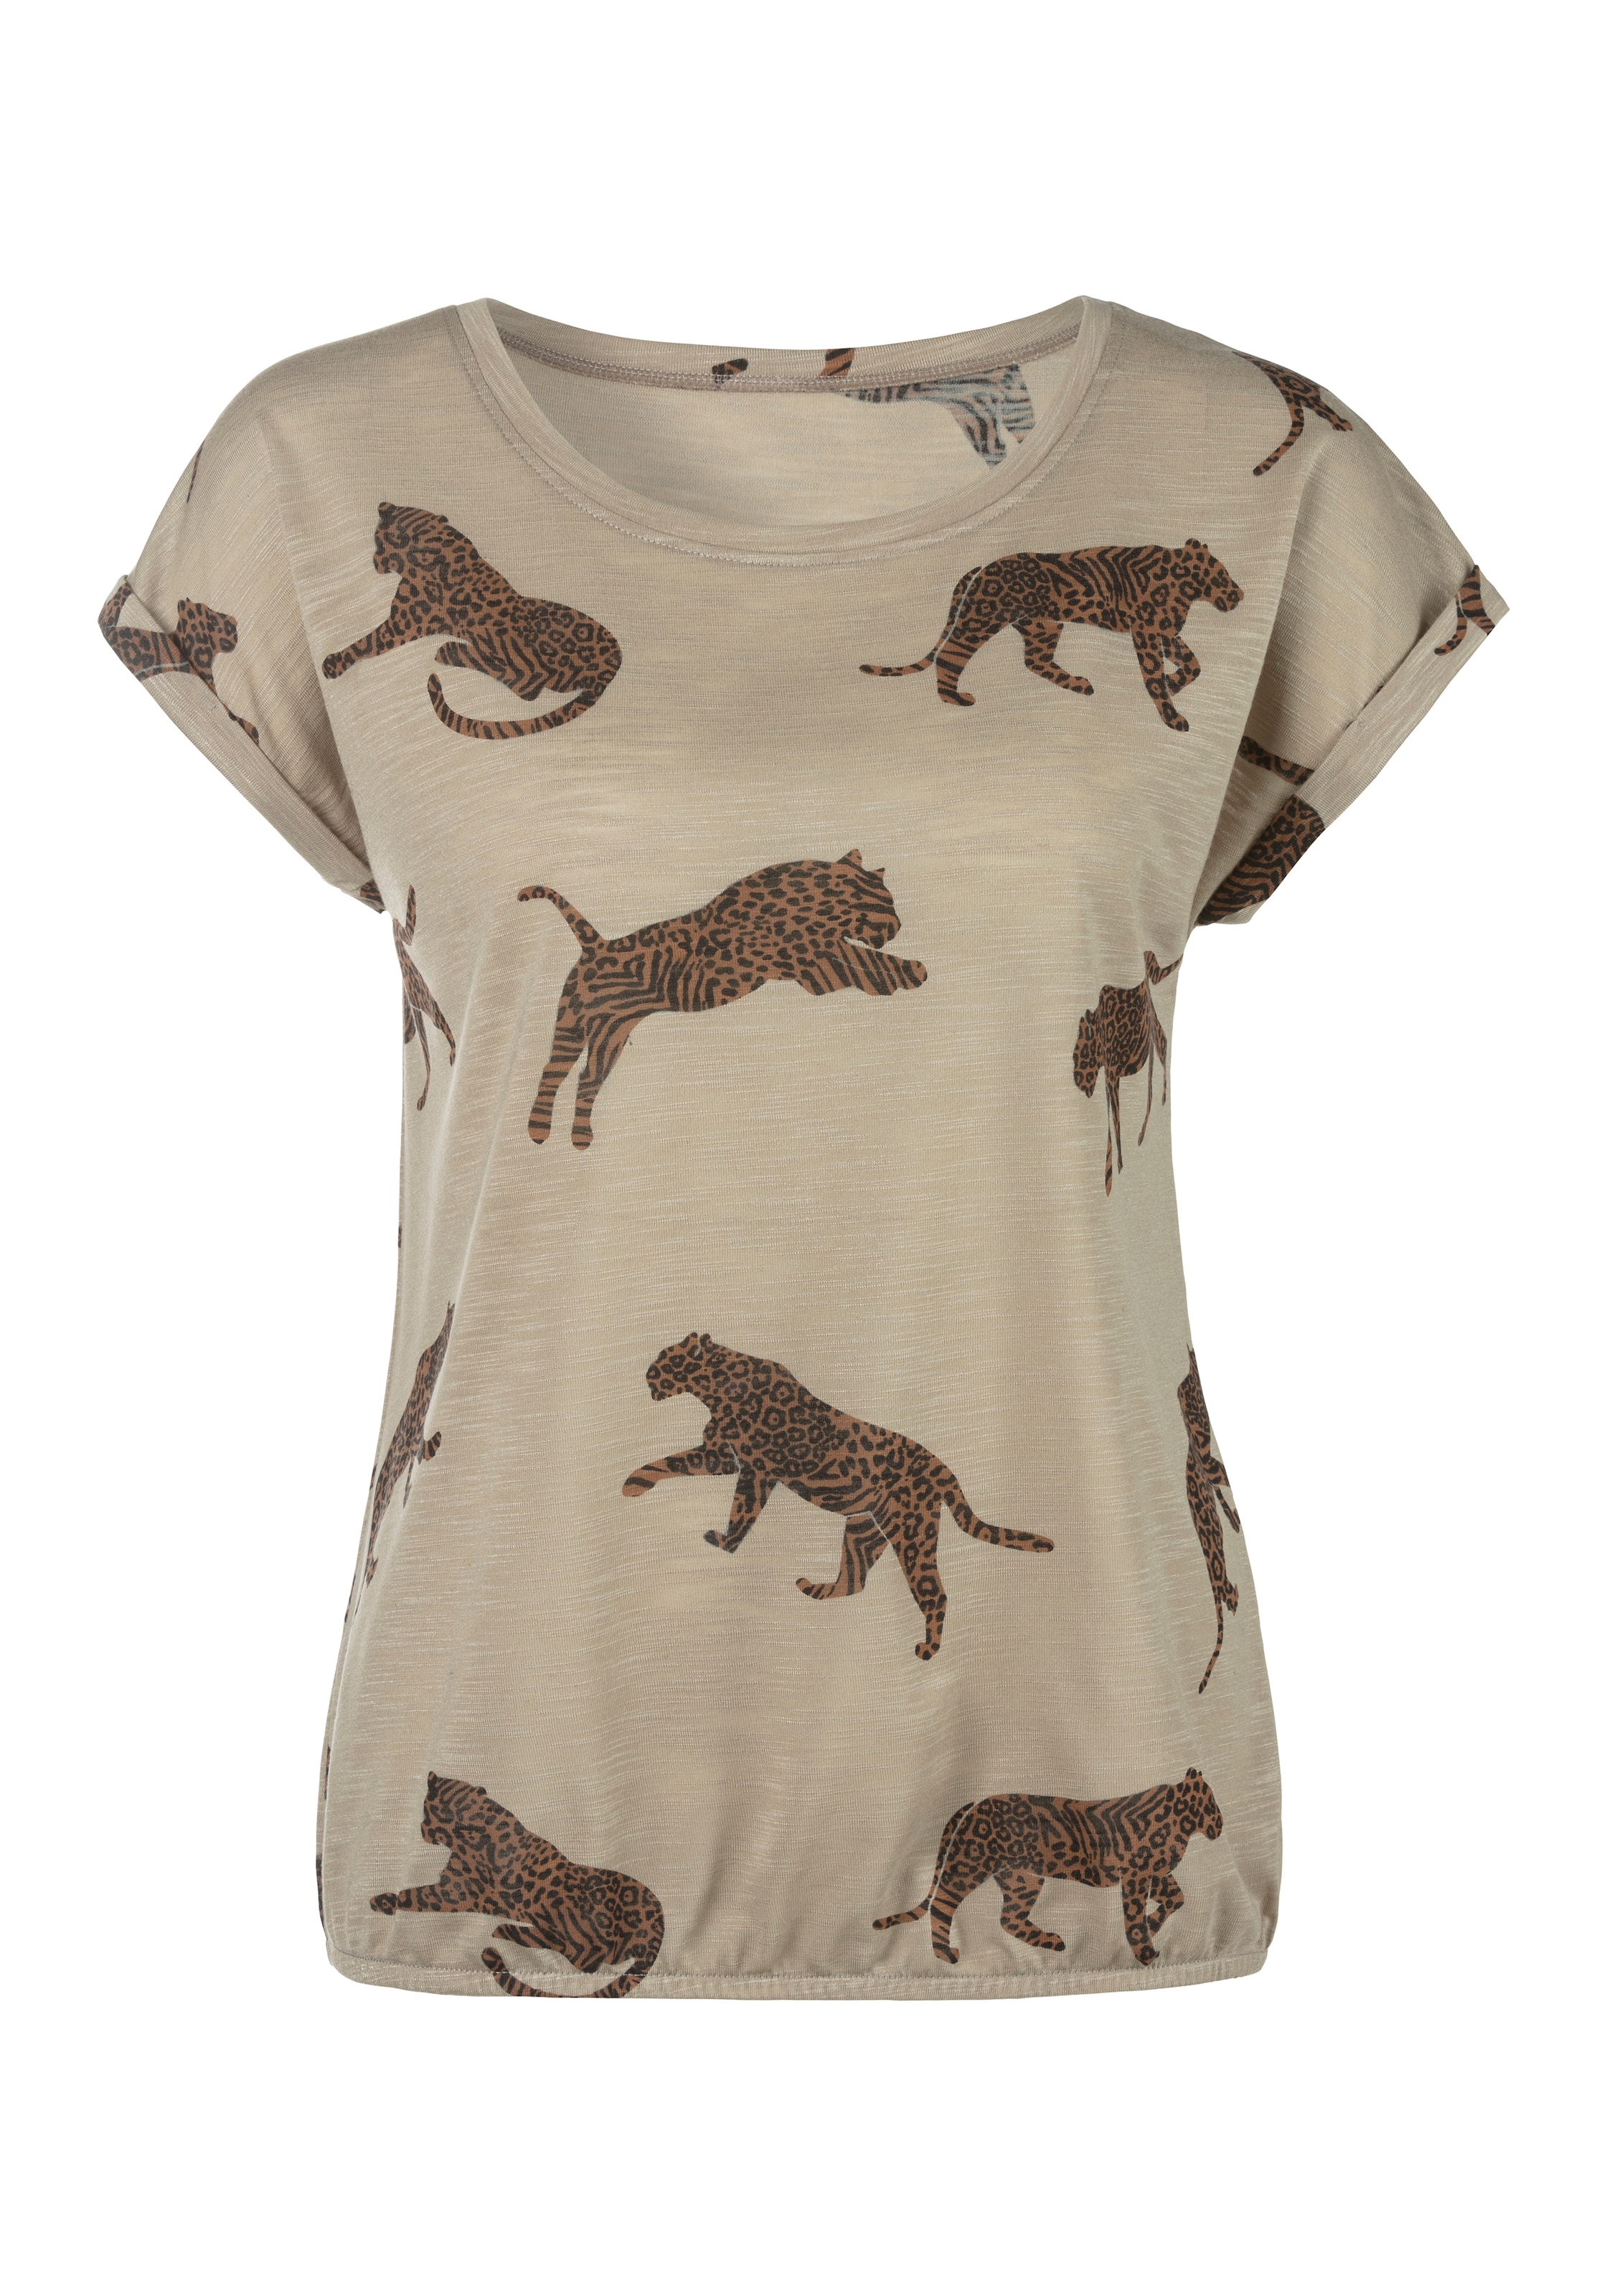 mit Kurzarmshirt, Passform, LASCANA T-Shirt, bei casual-chic Damen Leoparden-Motiv, lockere online